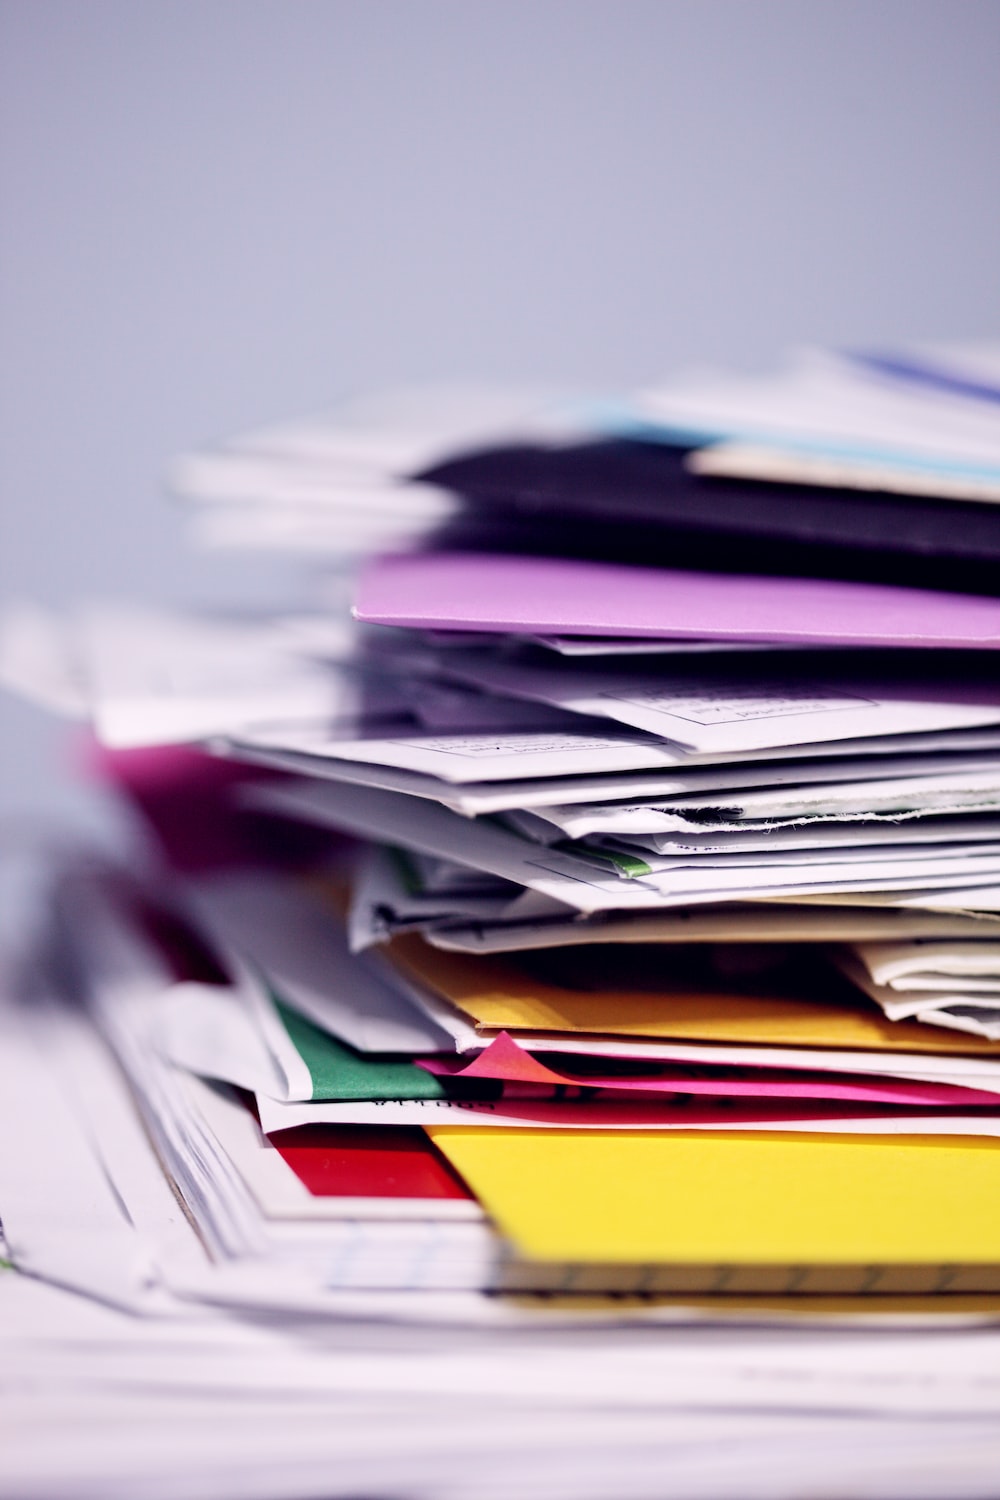 How do you organize your filing?